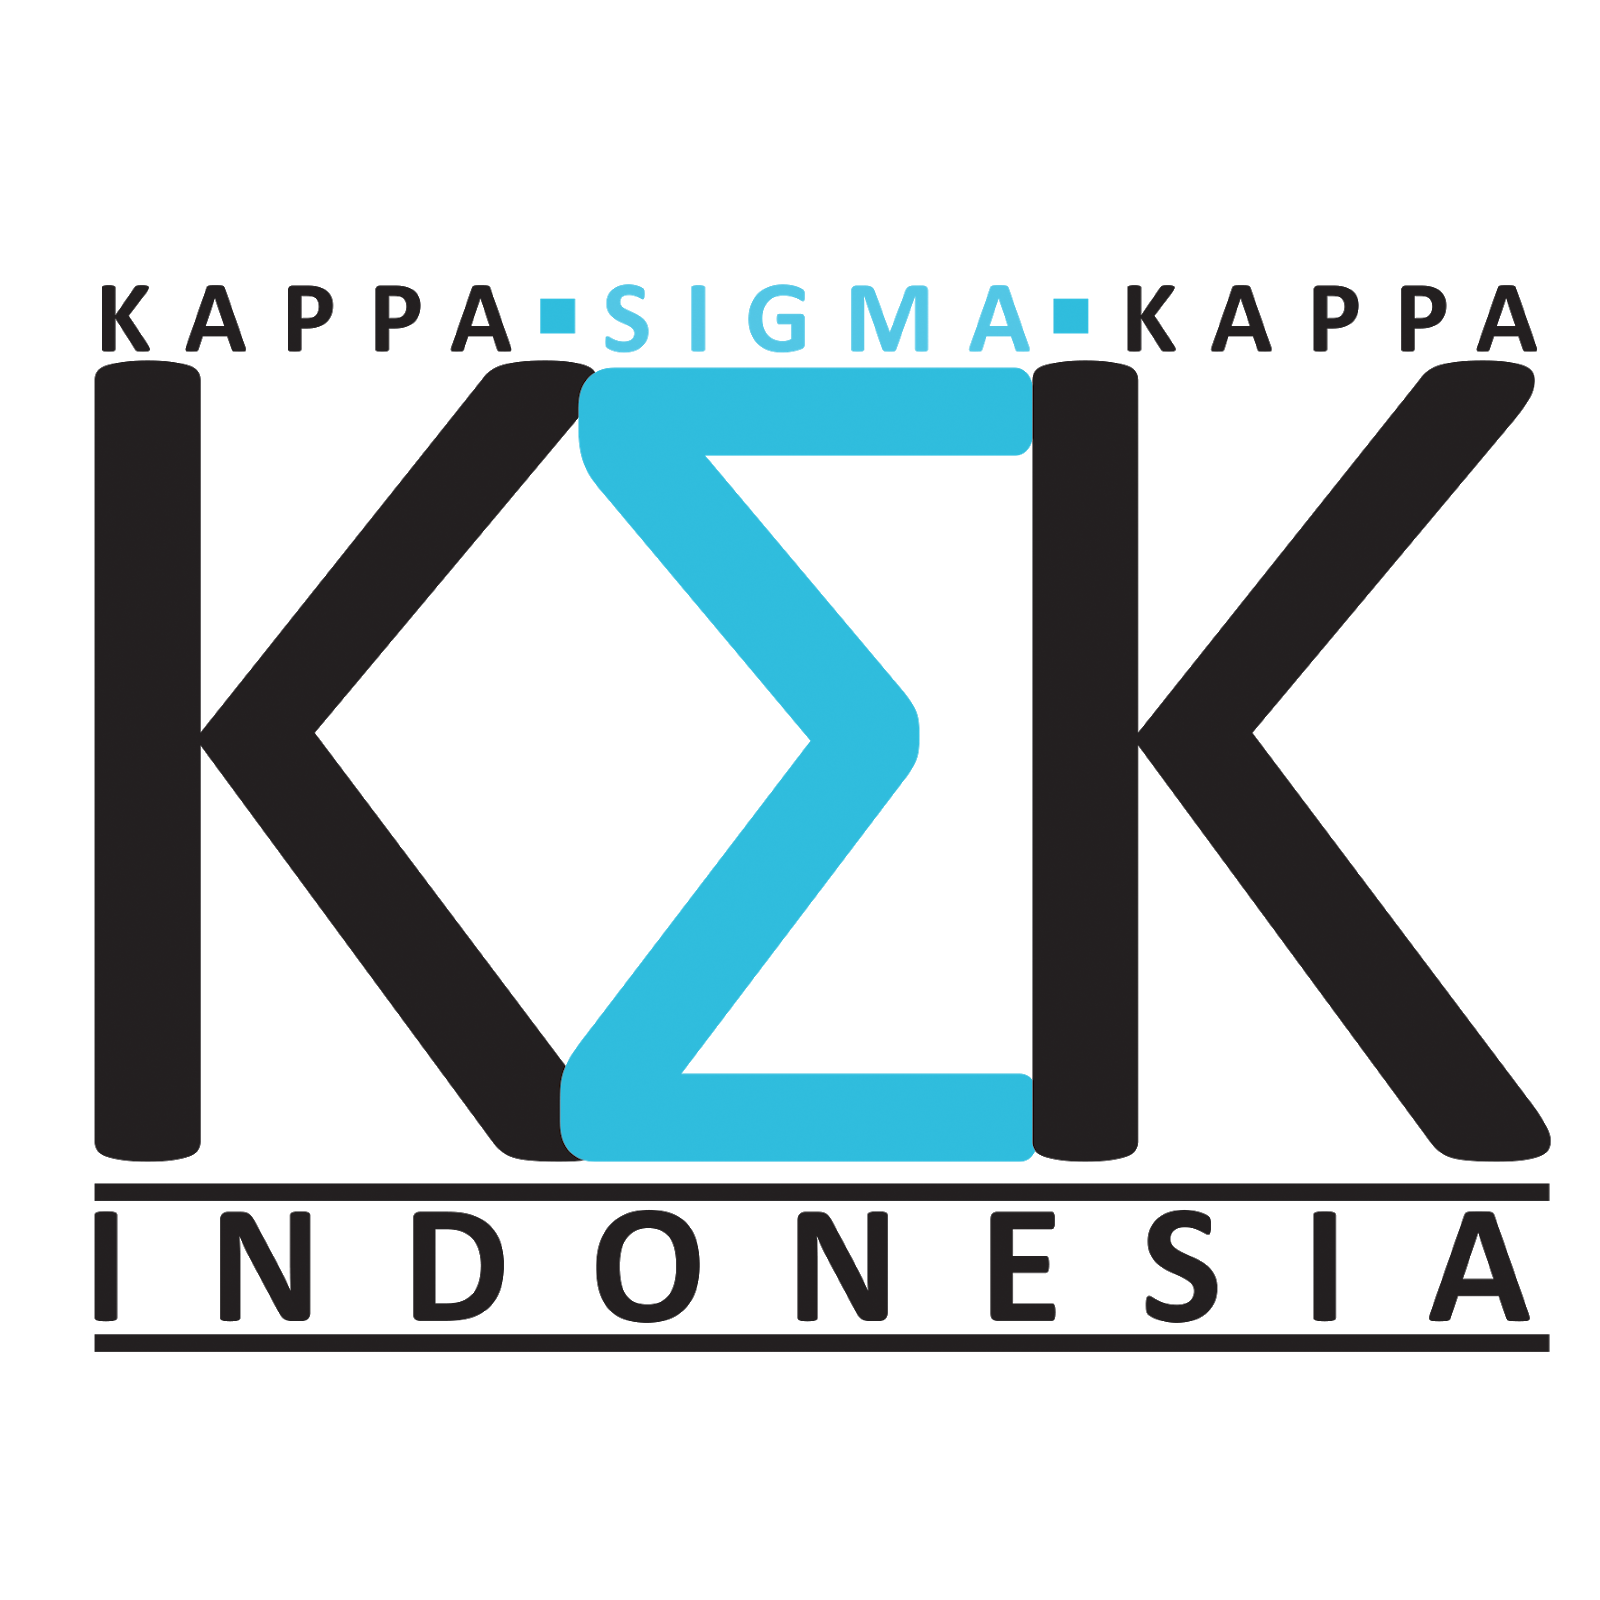 Kappa Sigma Indonesia (KSKI) – Karya Studi Kedokumentasian Indonesia